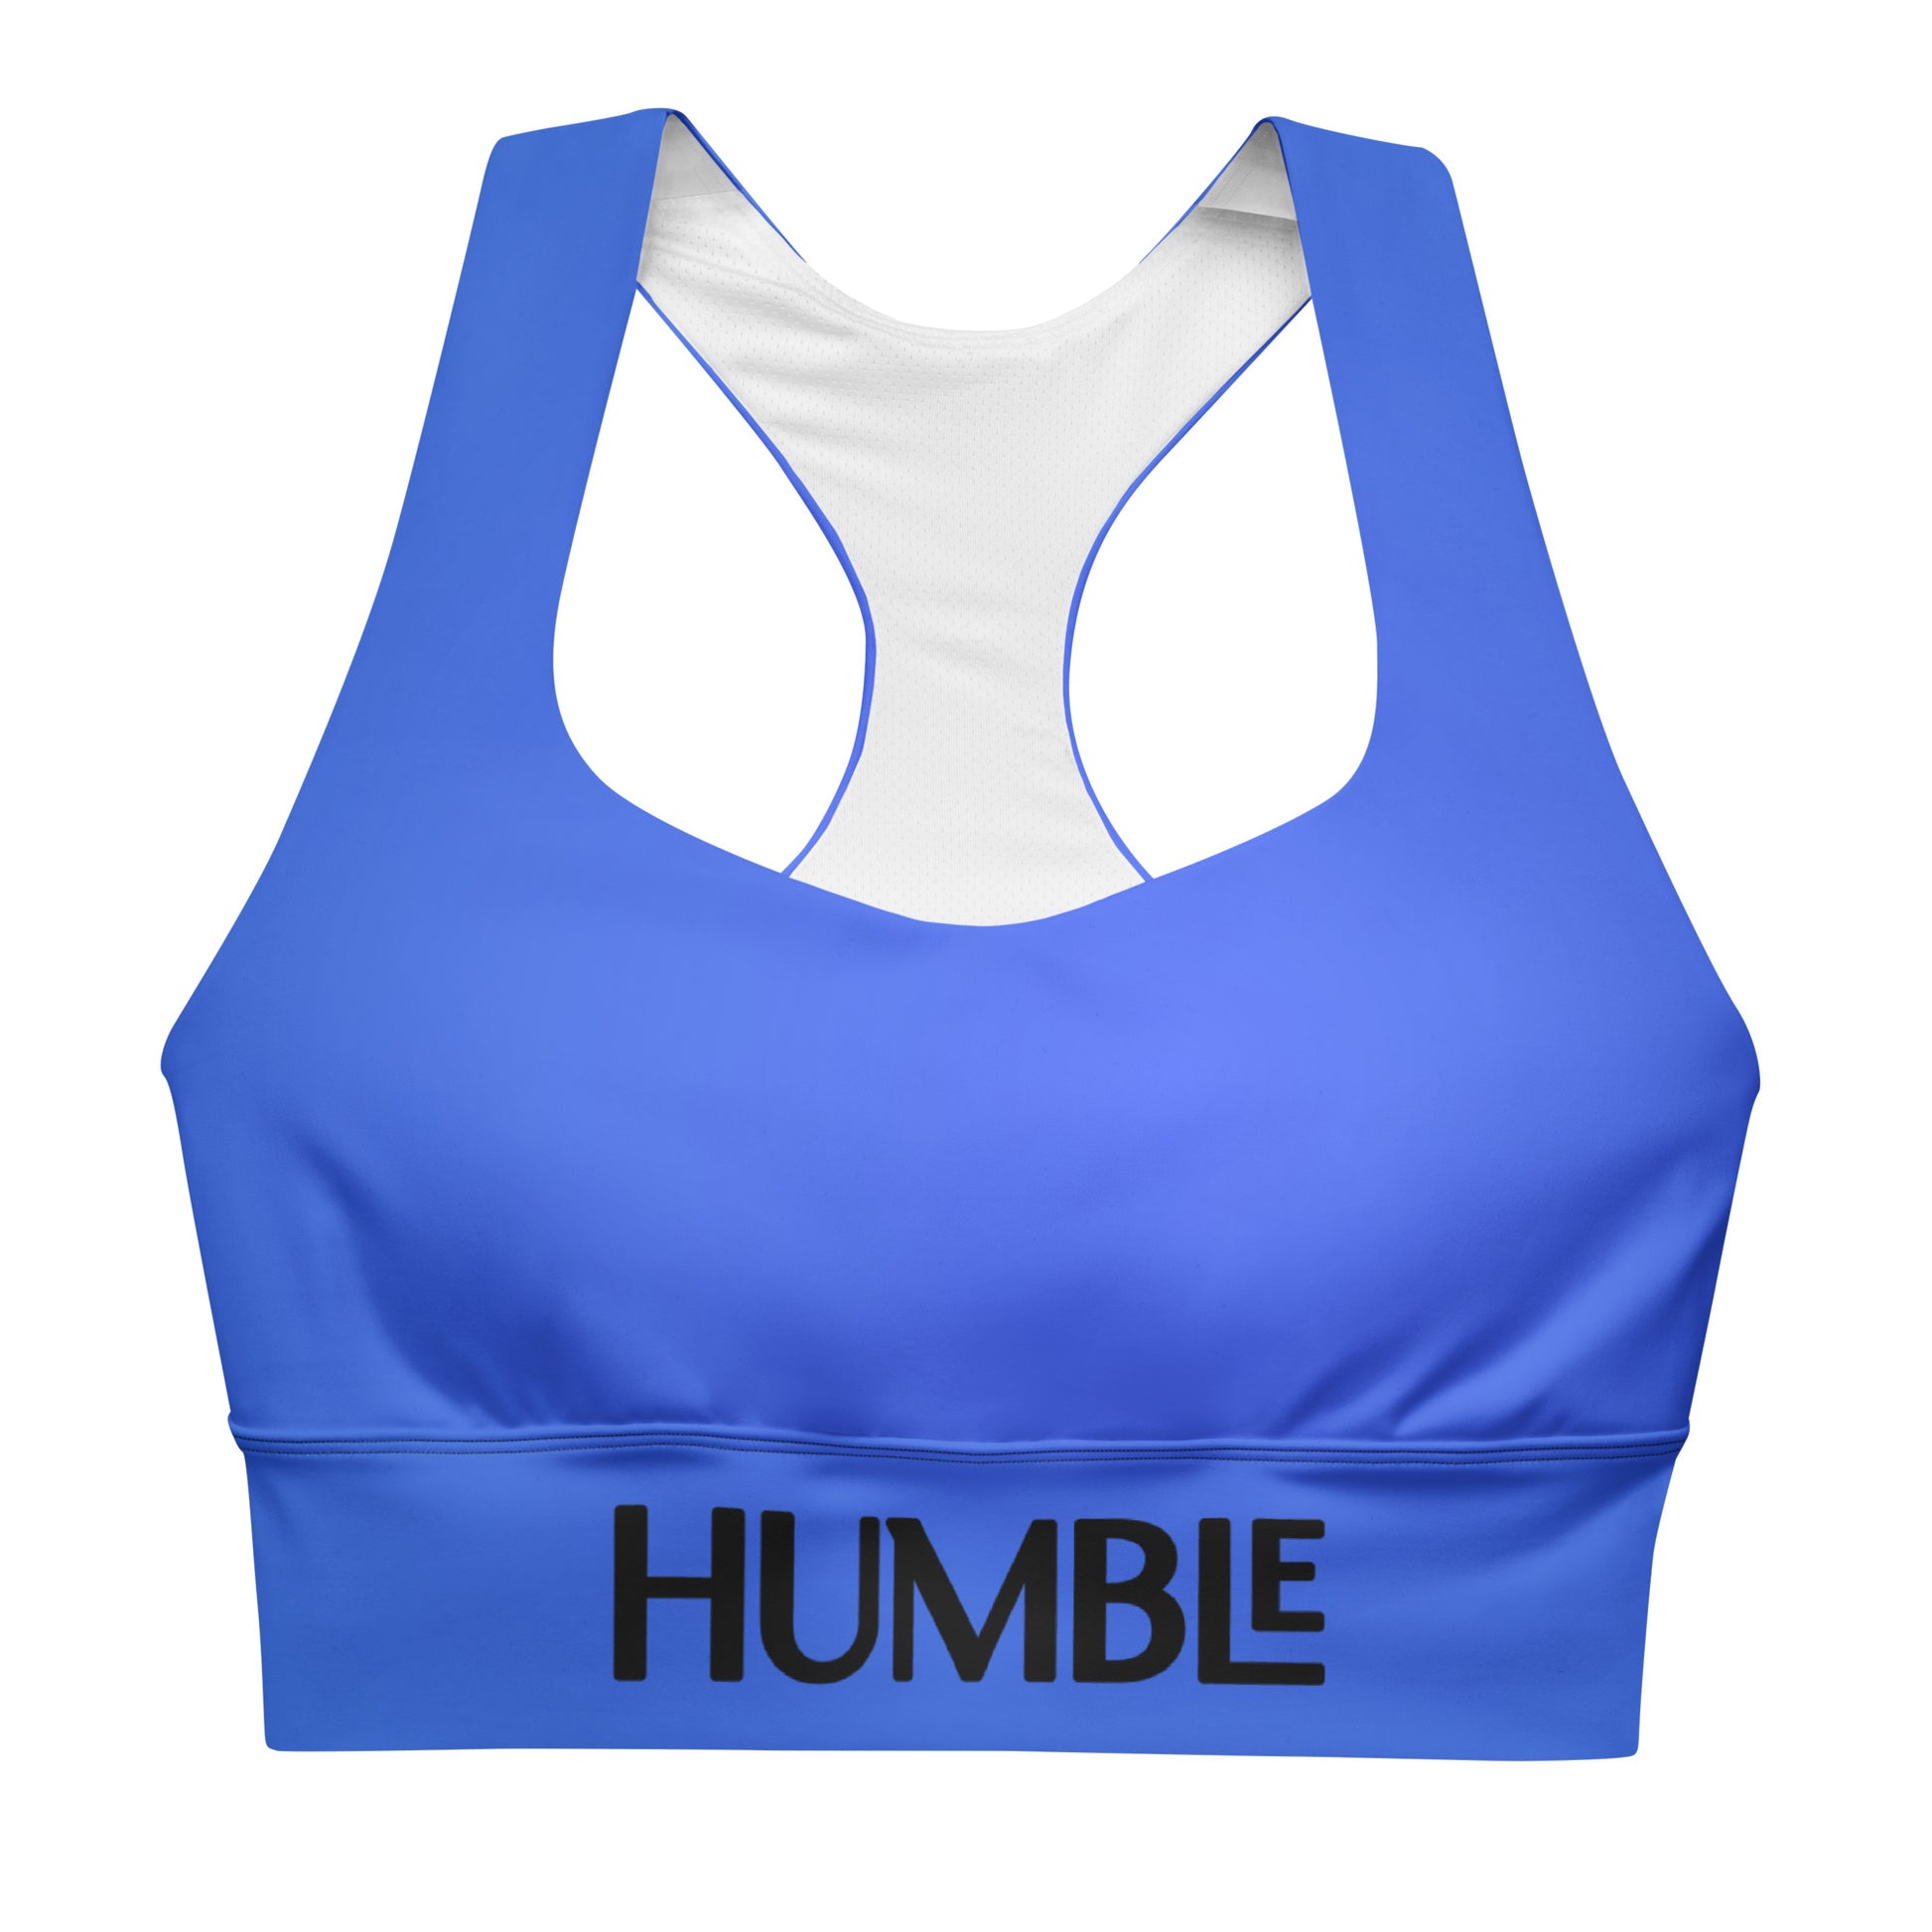 Humble Sportswear™ Women's Royal Blue Compression Sports Bra - Mireille Fine Art